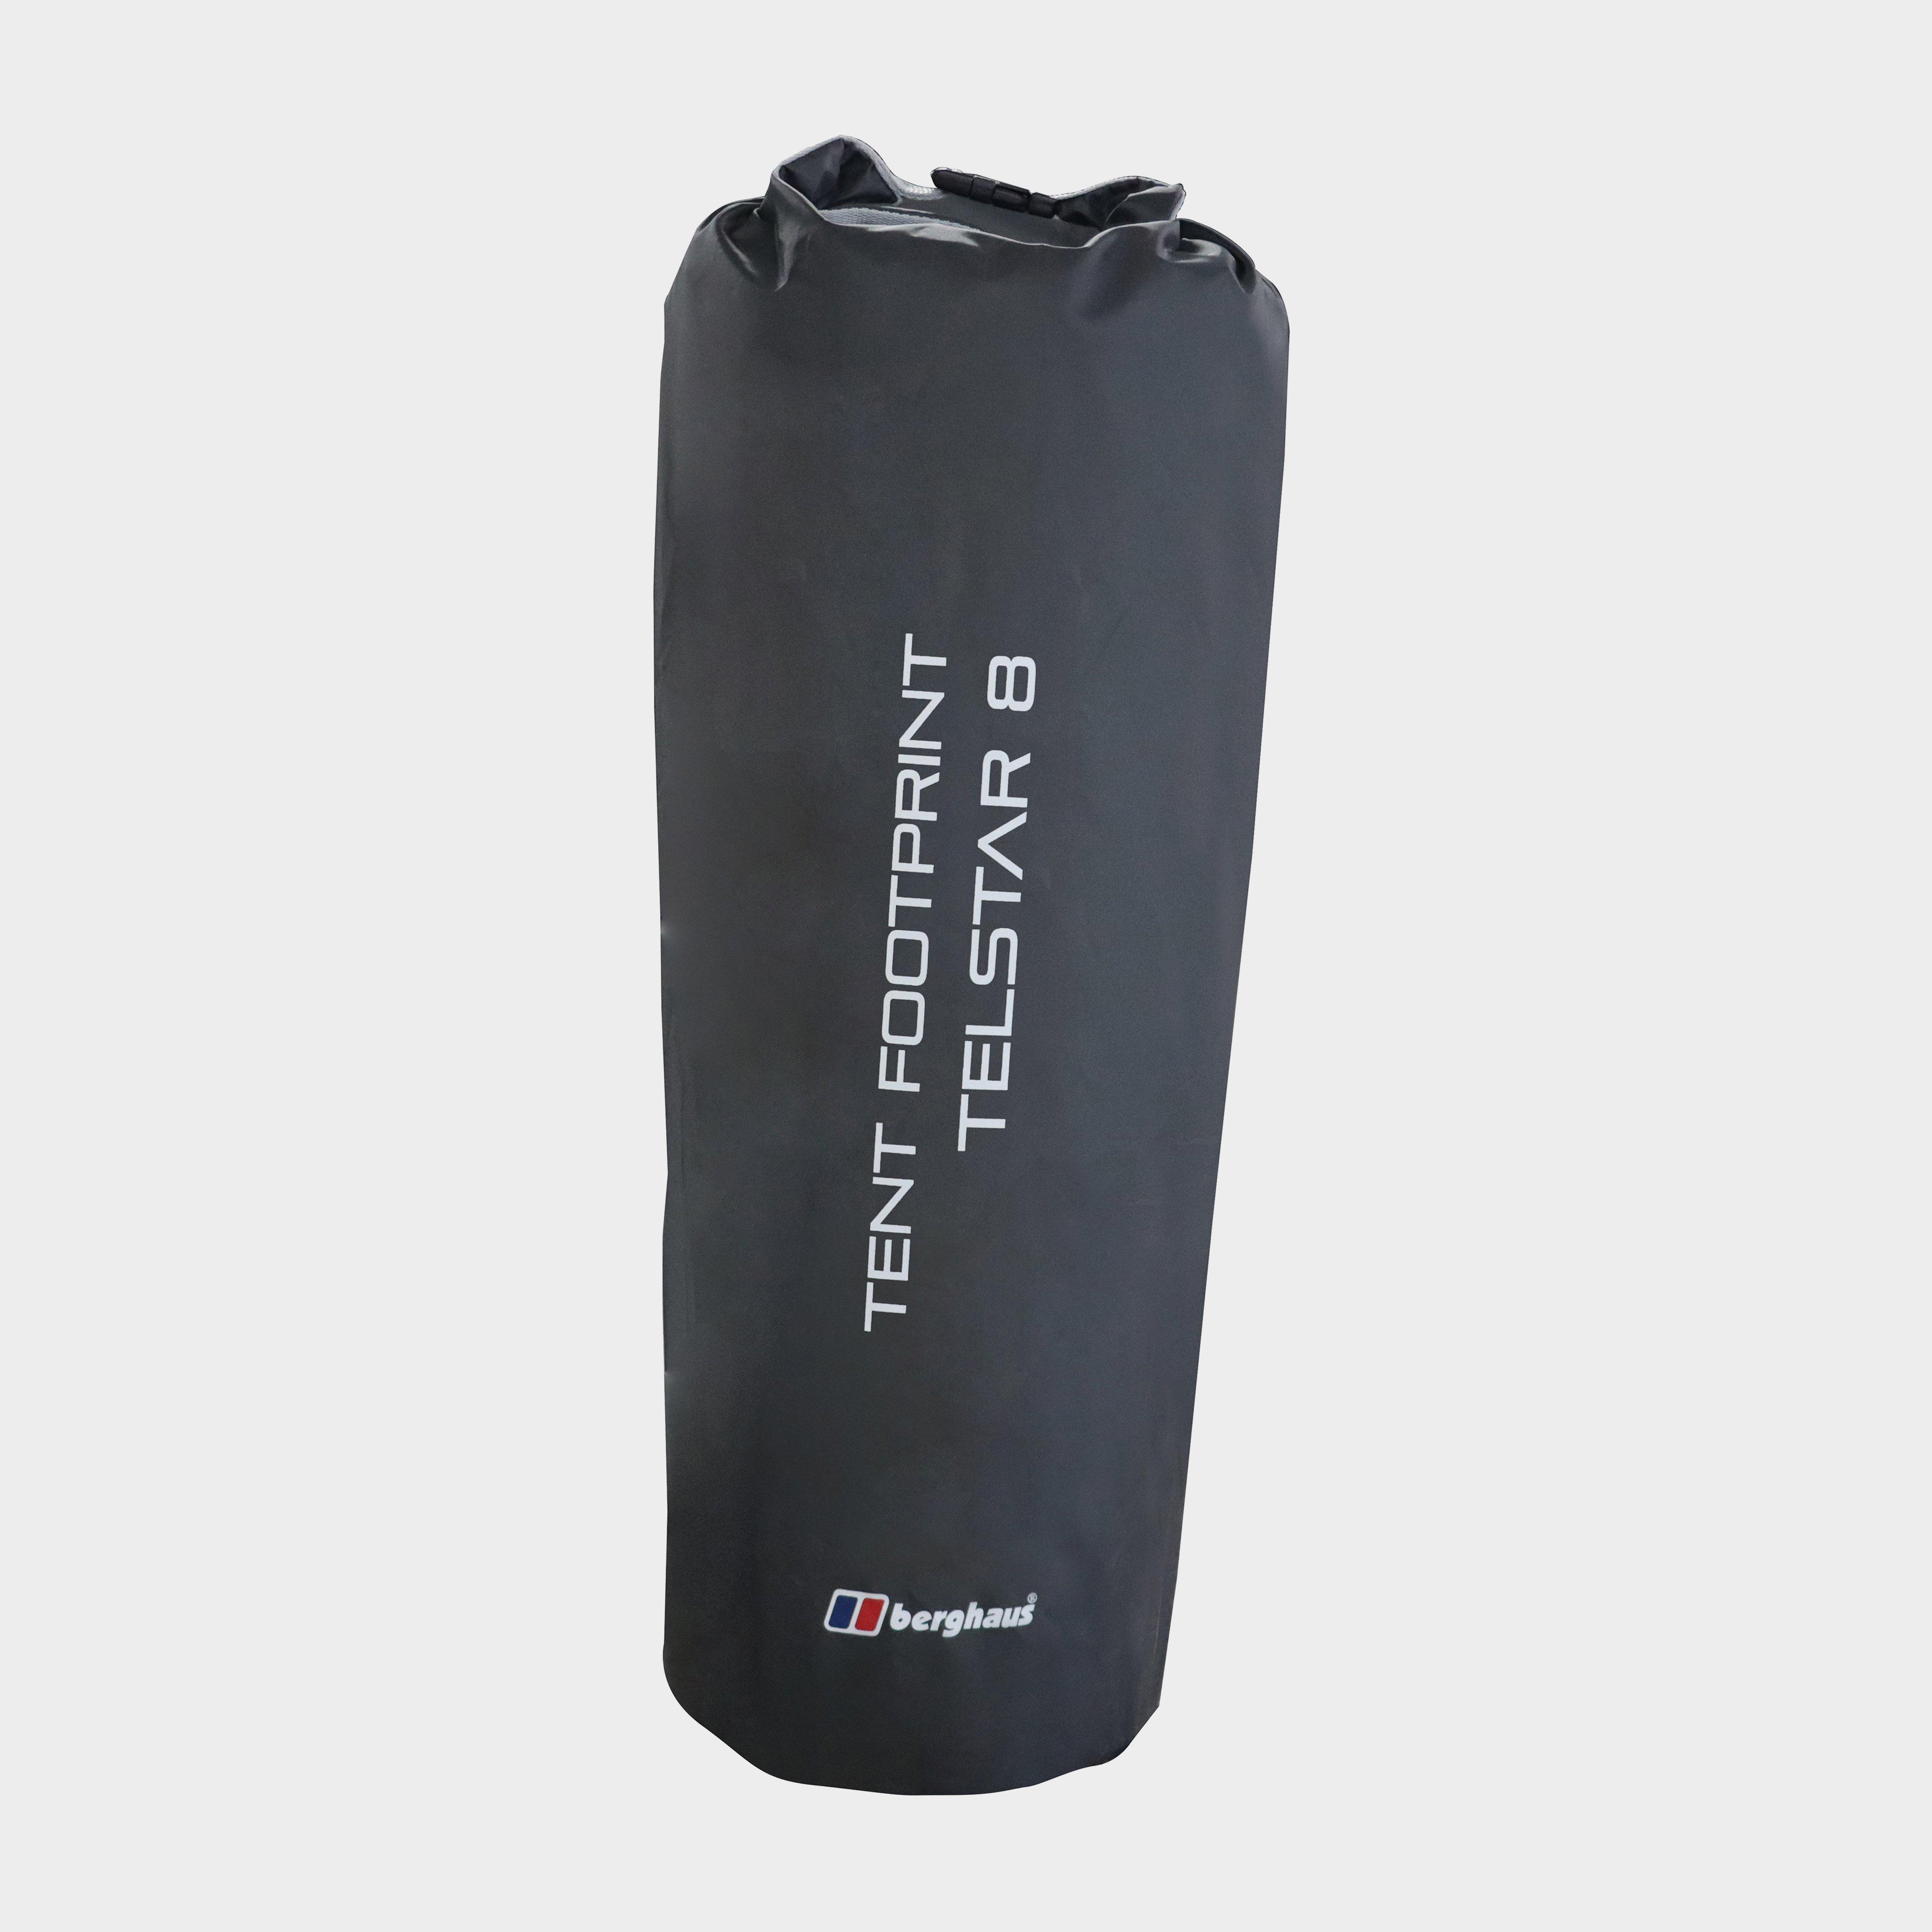 Berghaus Telstar 8 Tent Footprint - Black/blk  Black/blk